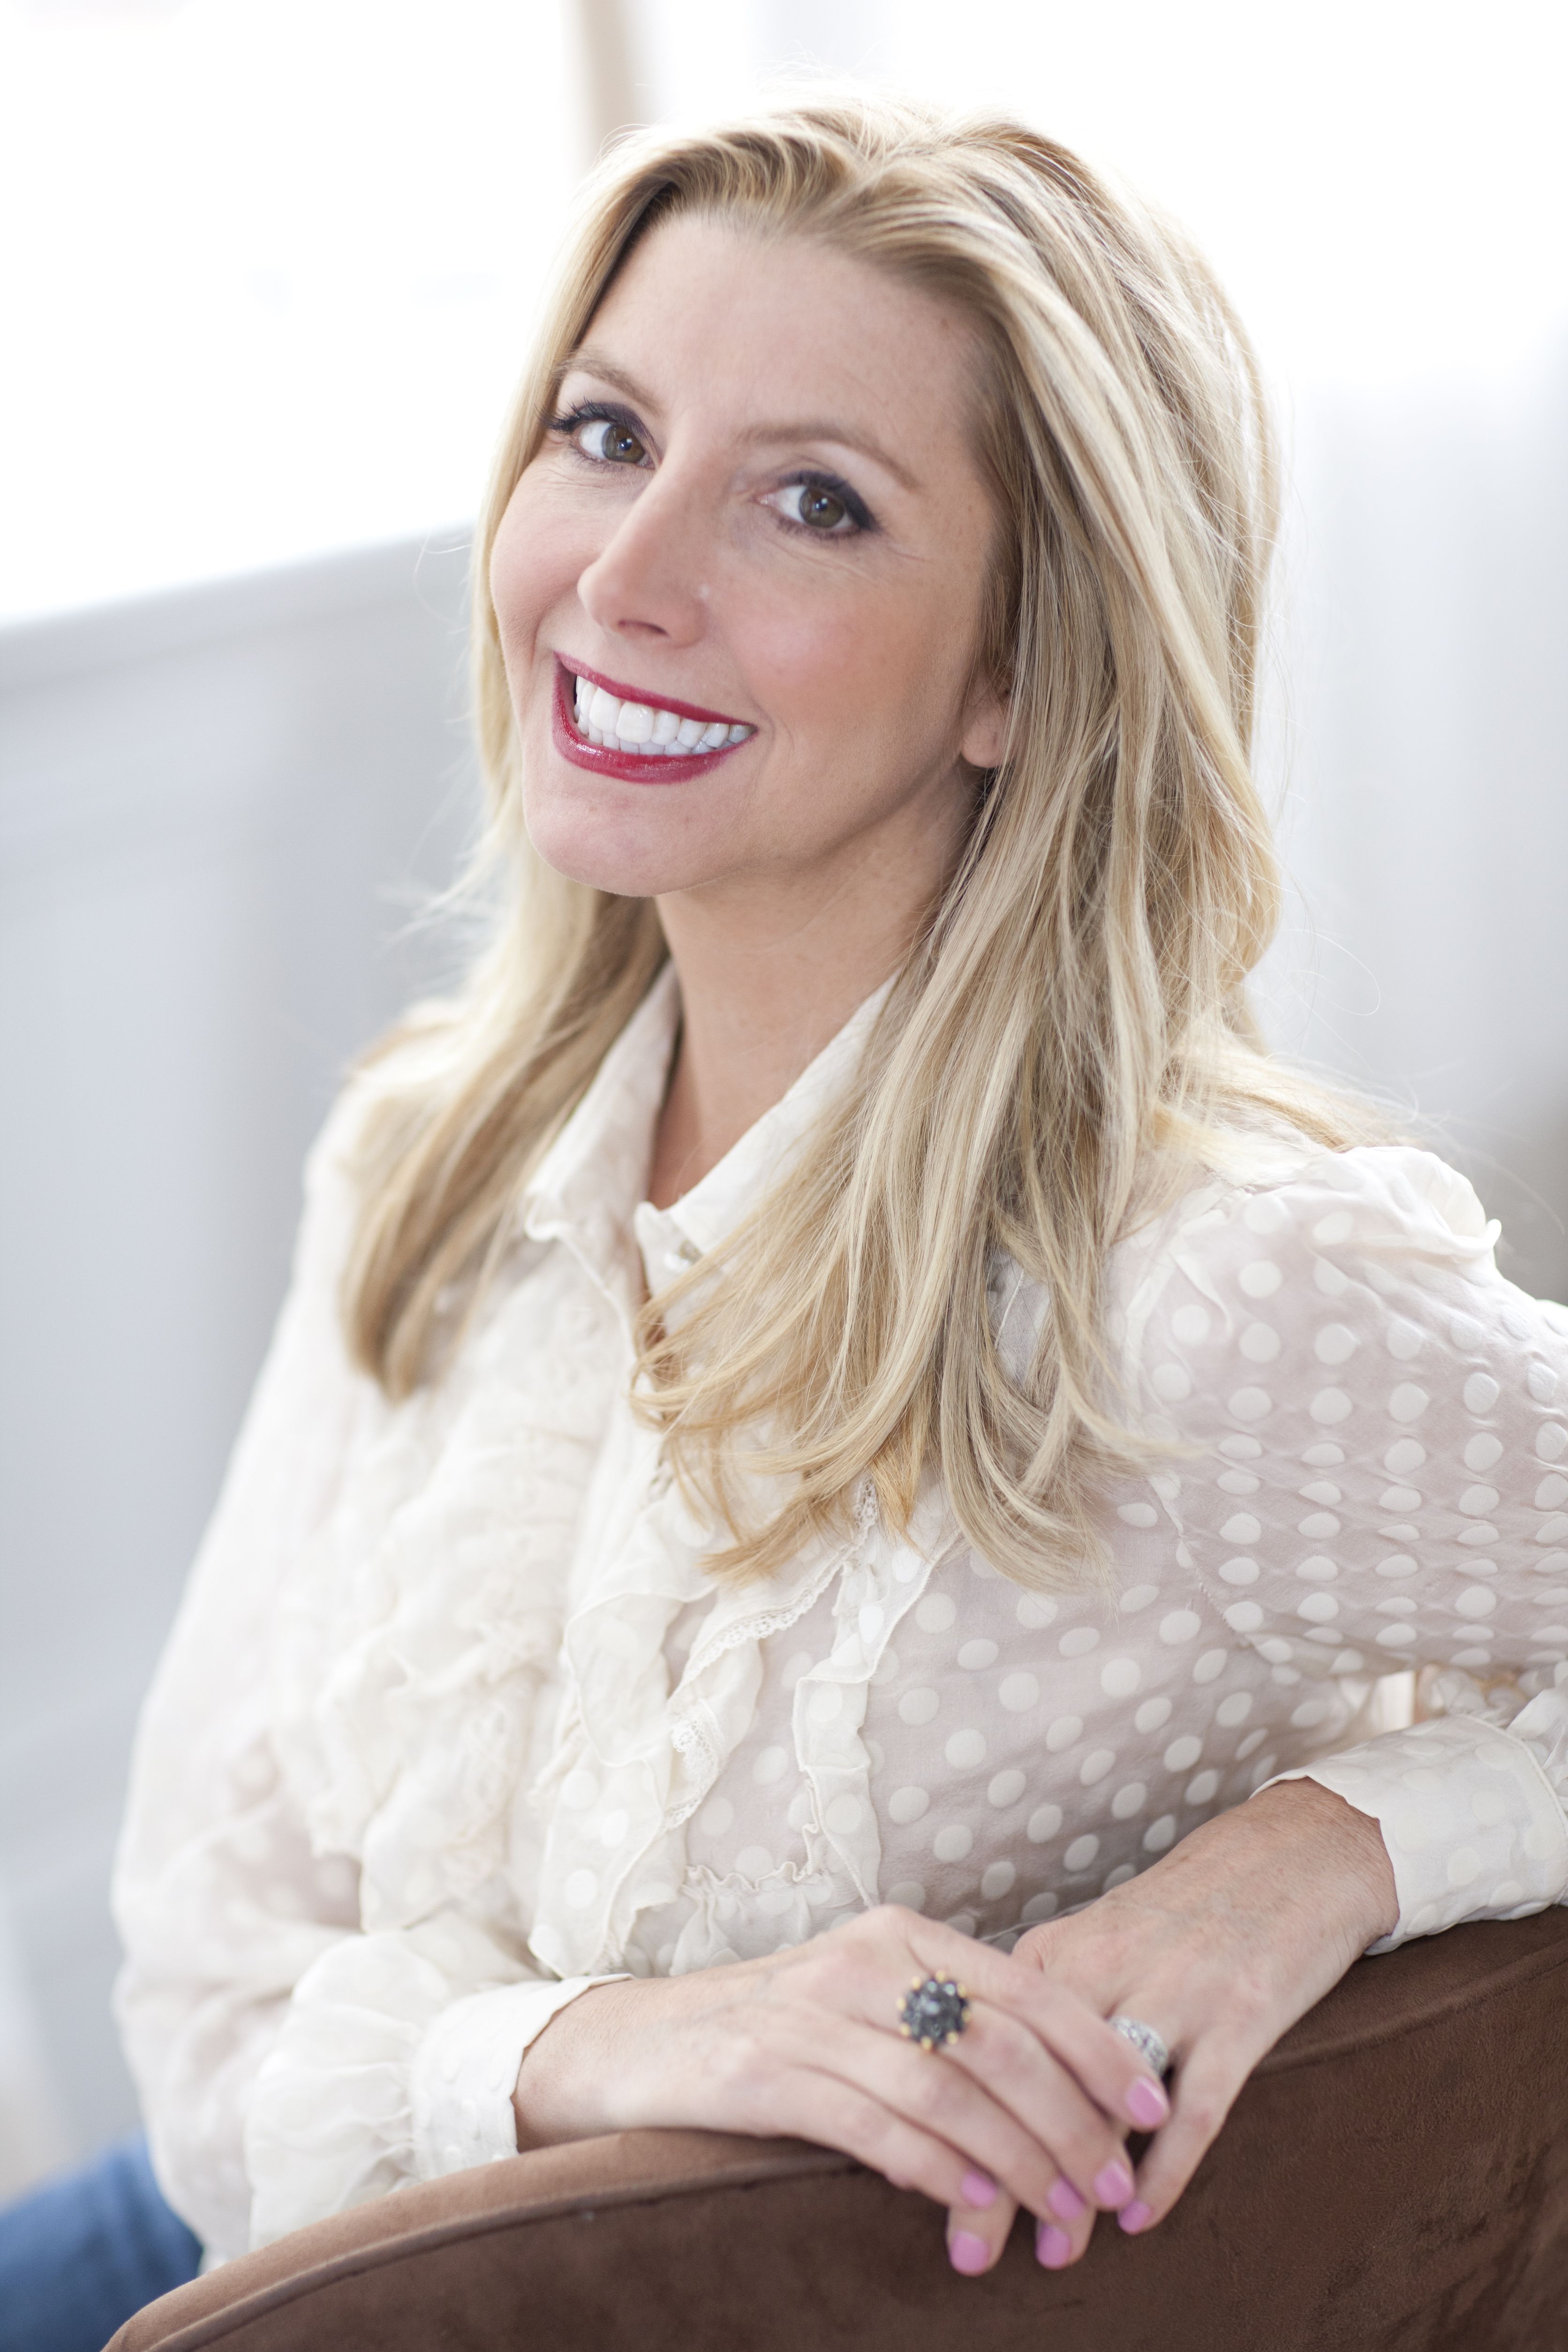 Sara Blakely Billionaire CEO & Founder of Spanx - Video Interview